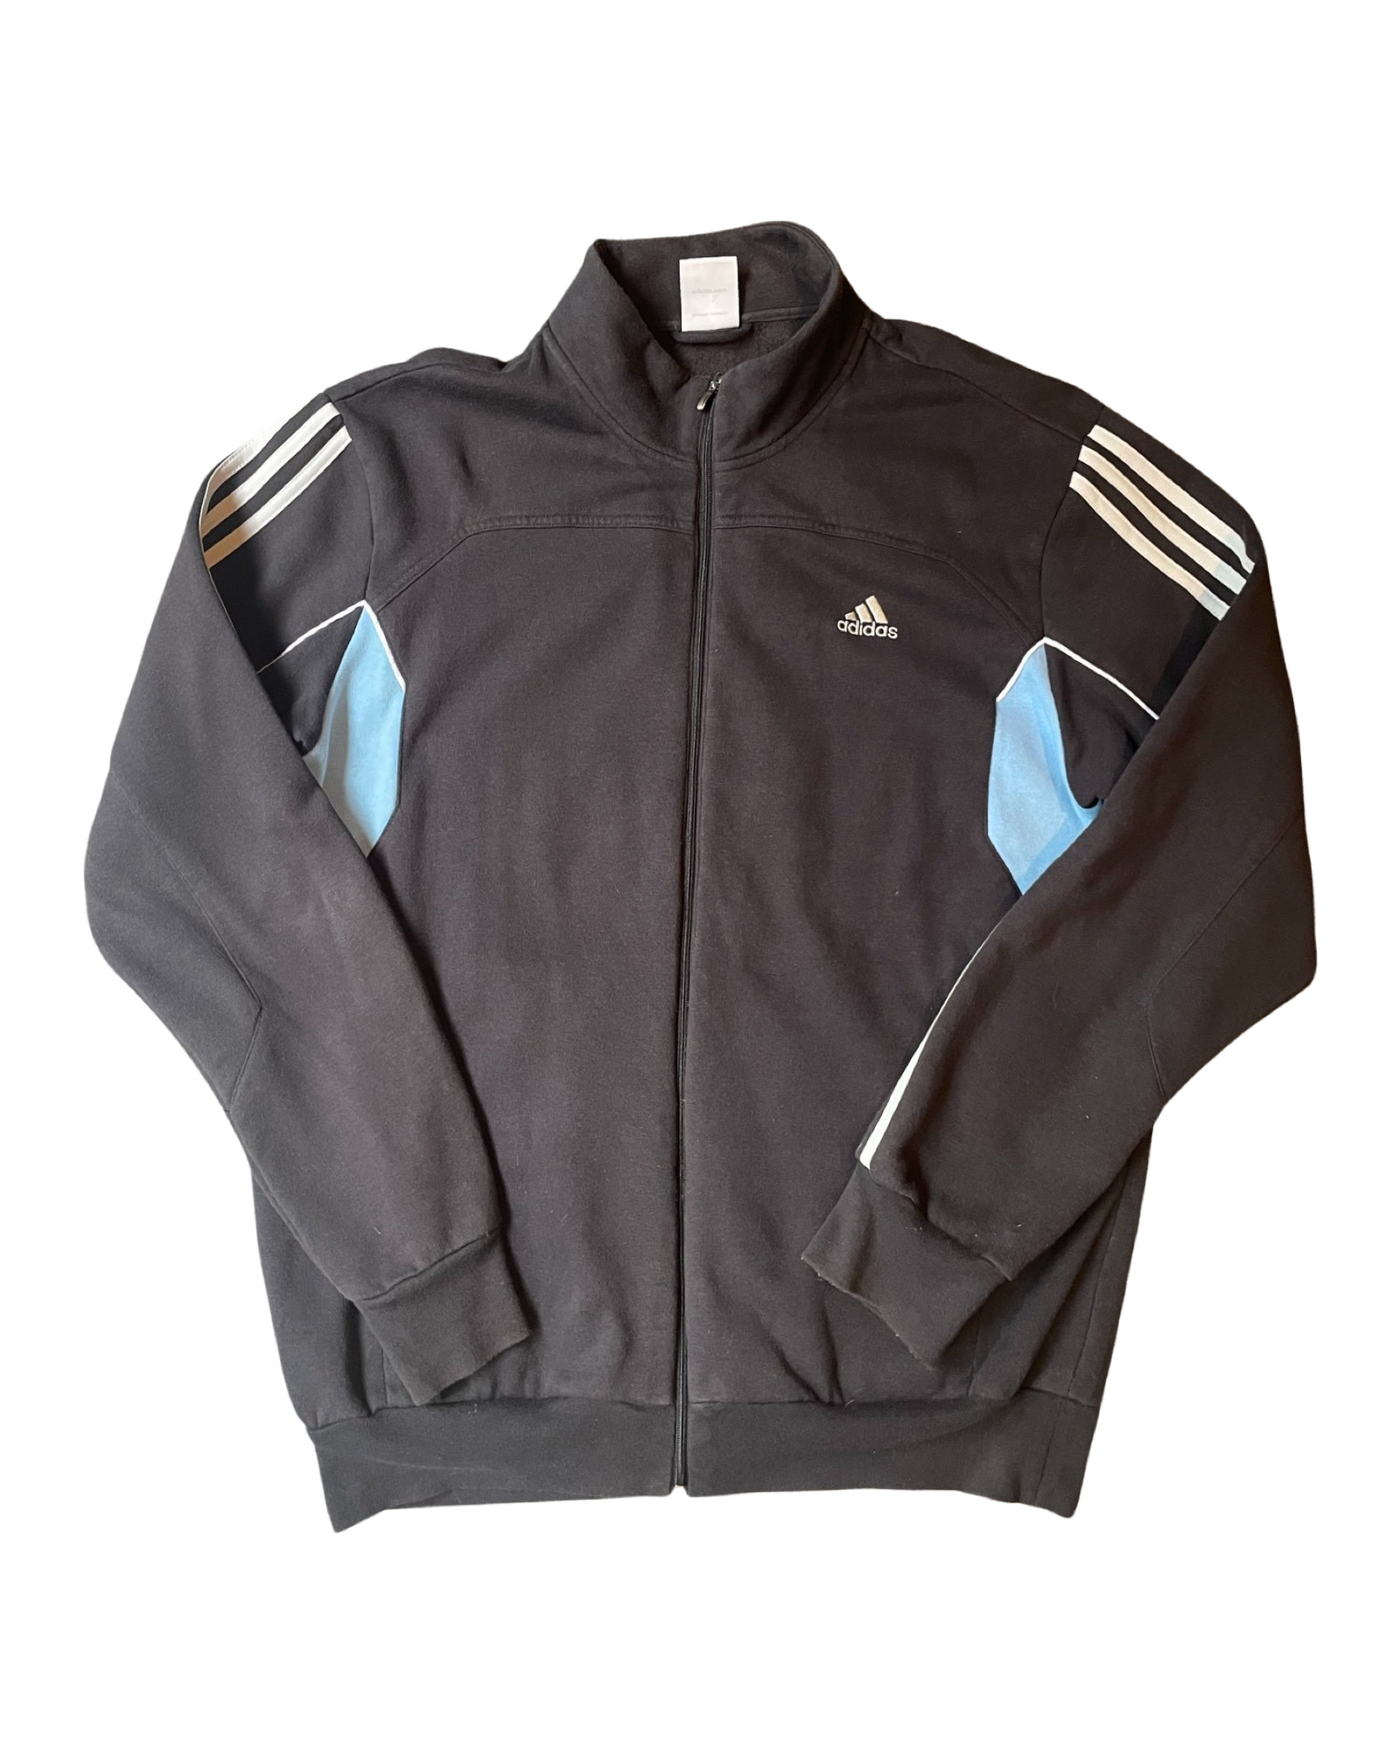 Vintage Adidas Zip Up Sweat Jacket